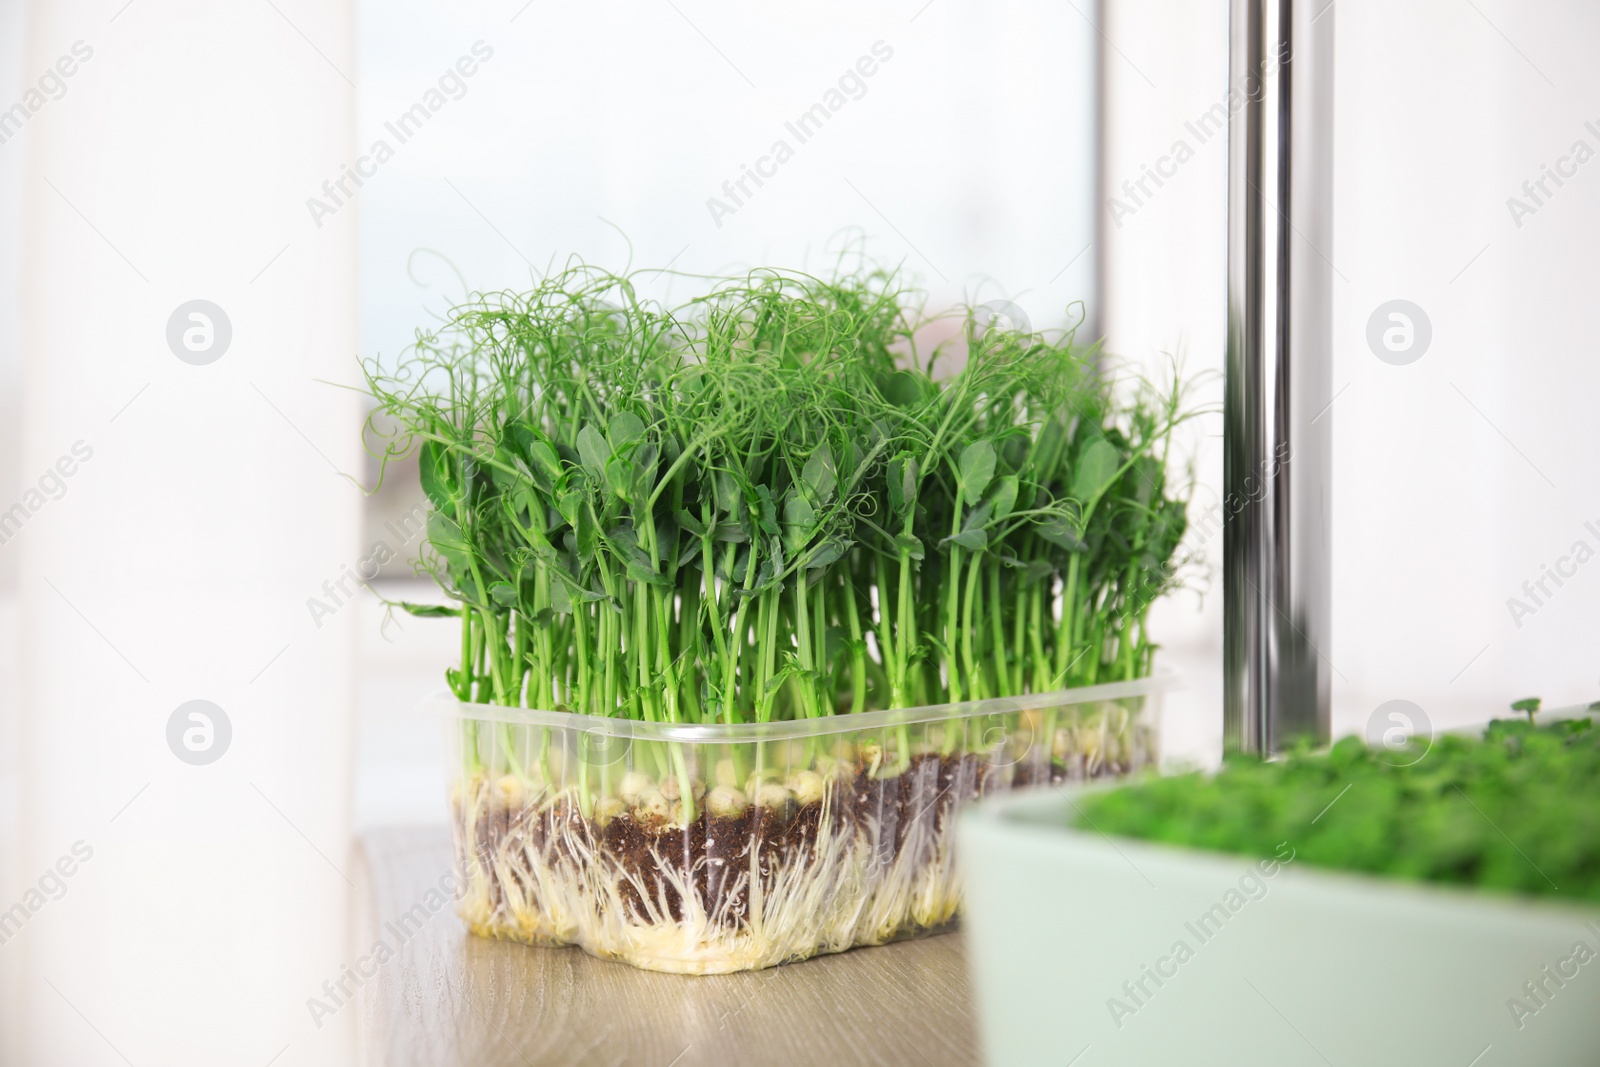 Photo of Fresh organic microgreen on wooden table indoors